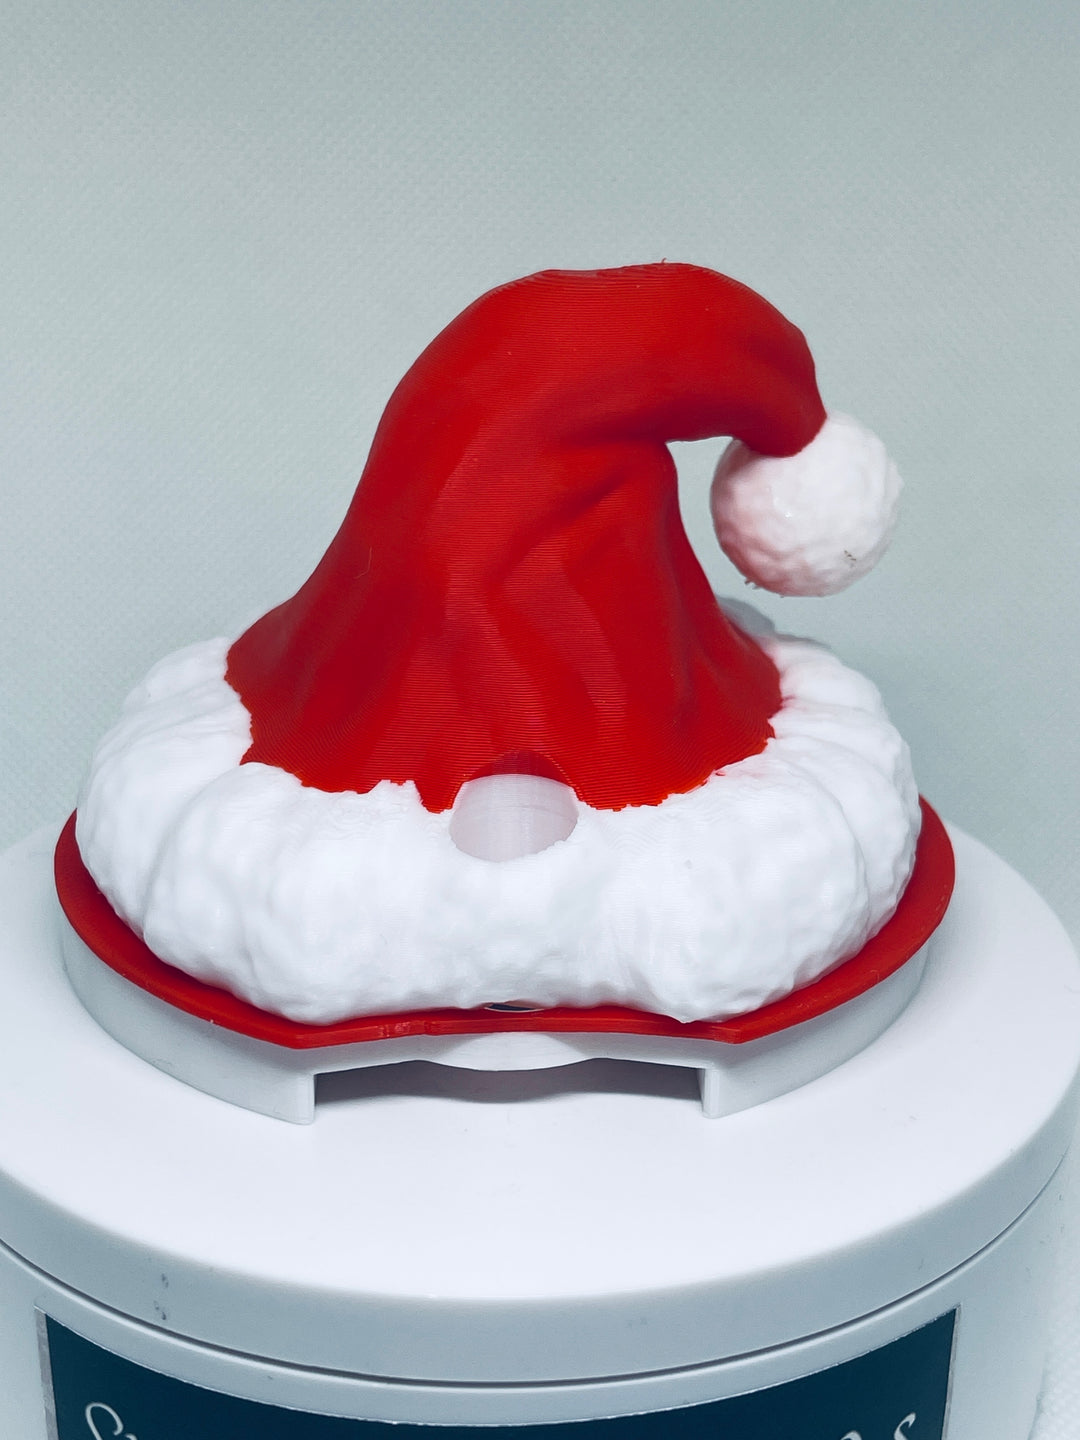 NEW 3D Santa Hat Tumbler Topper for 40 oz tumblers, 40 oz Christmas tumbler topper, 3D Christmas Topper